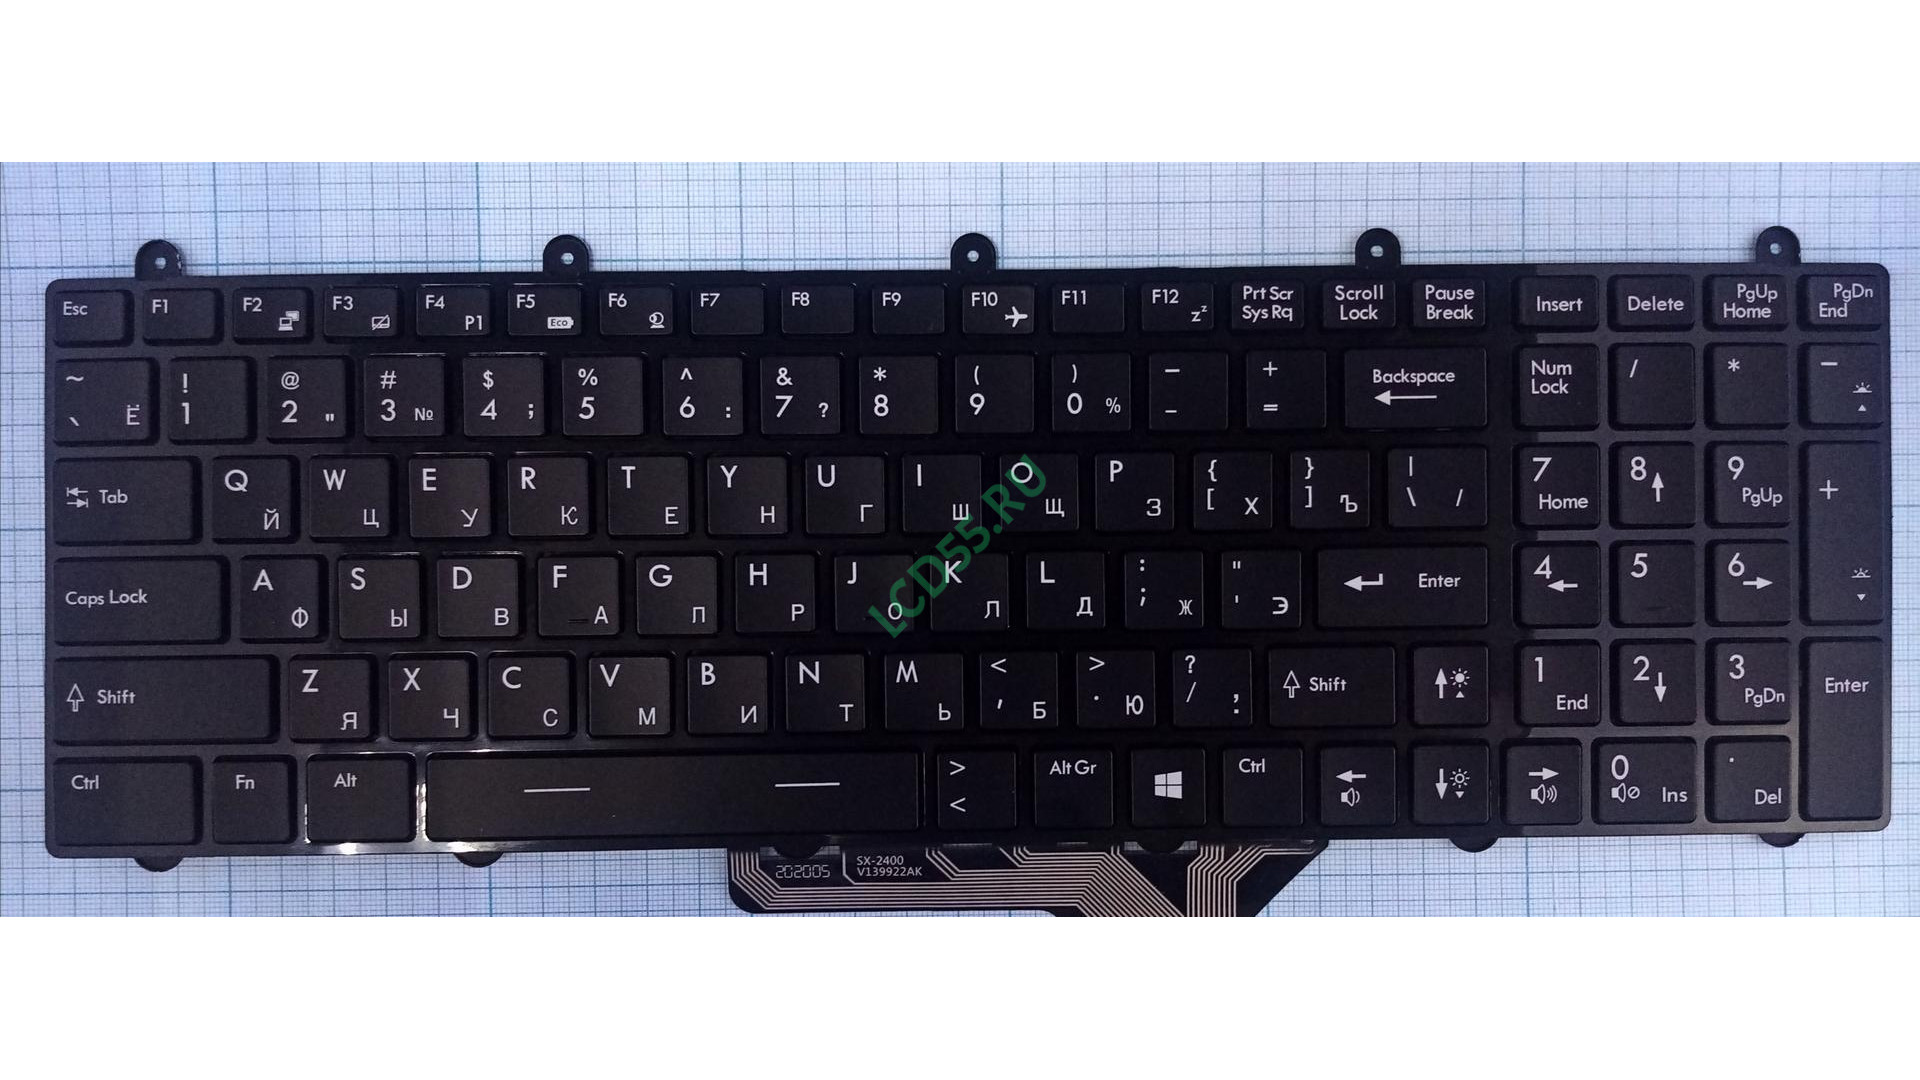 Клавиатура MSI GE60, GE70 с подсветкой (7 цветов)